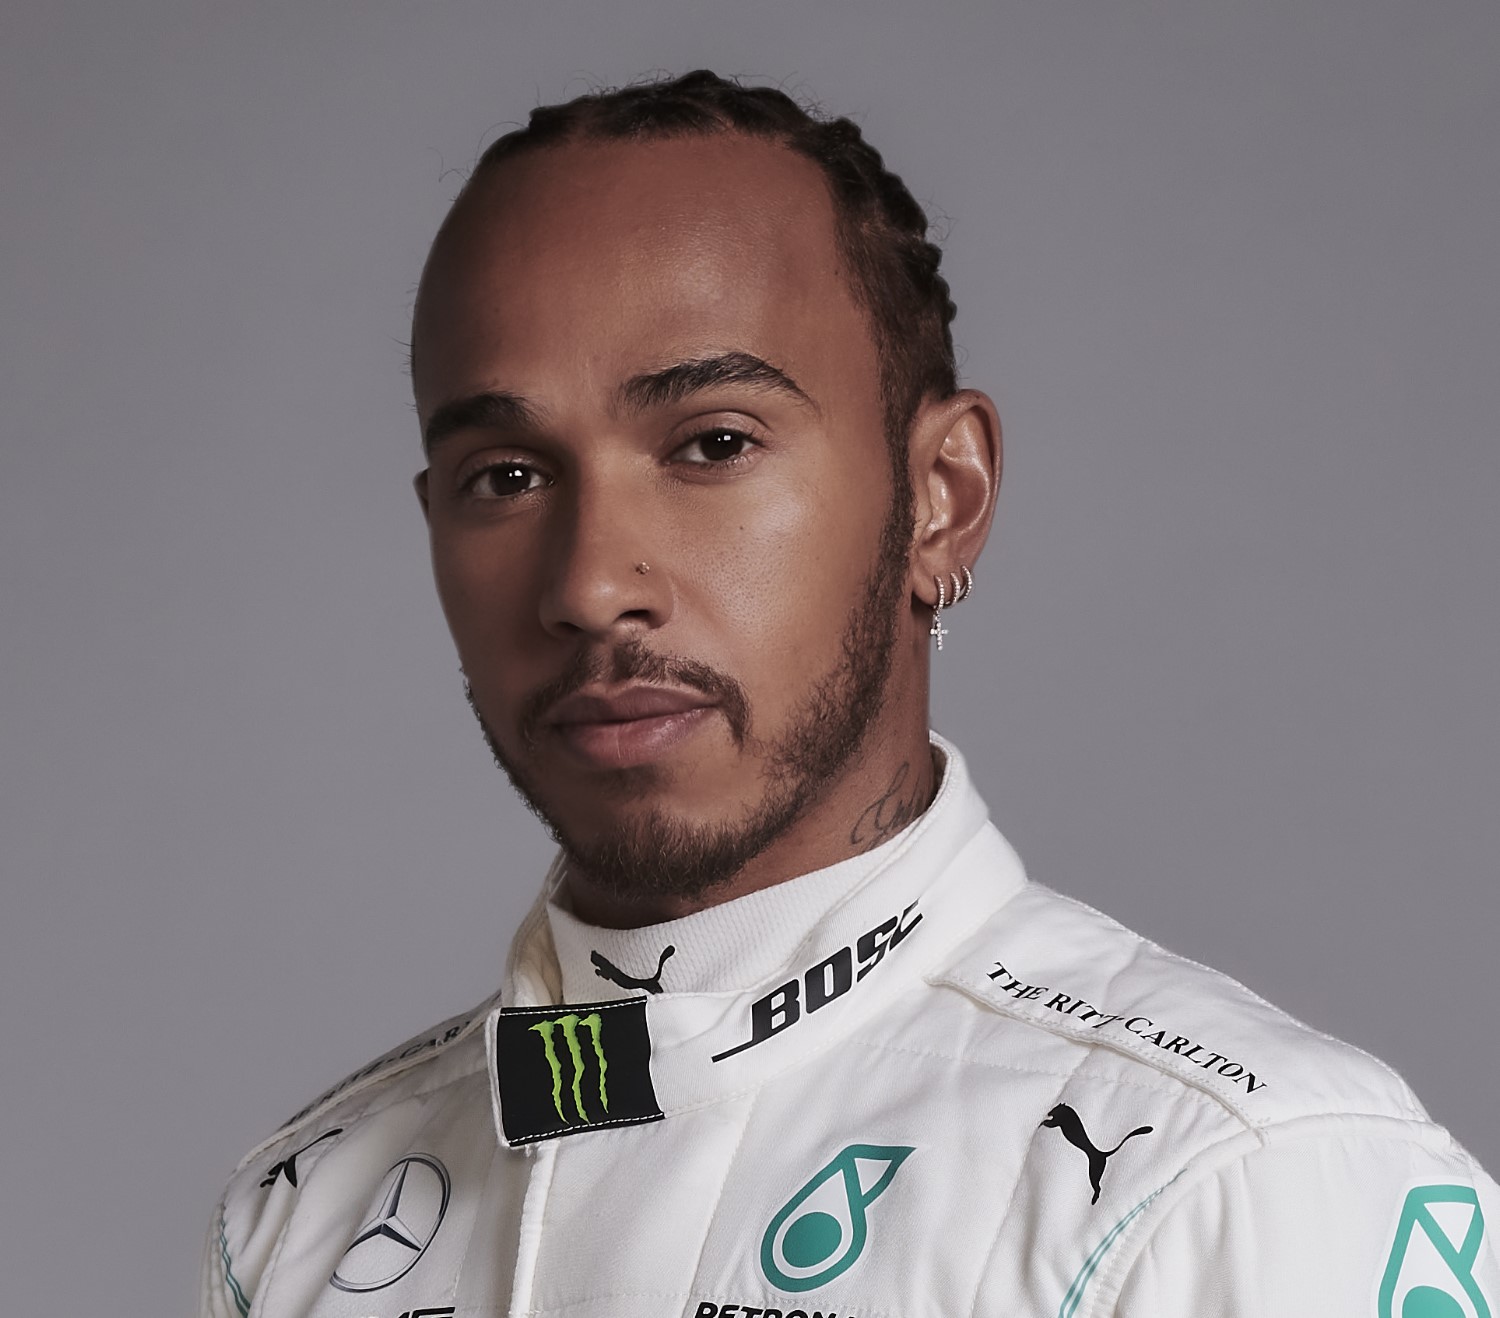 Hamilton will again have the dominant car